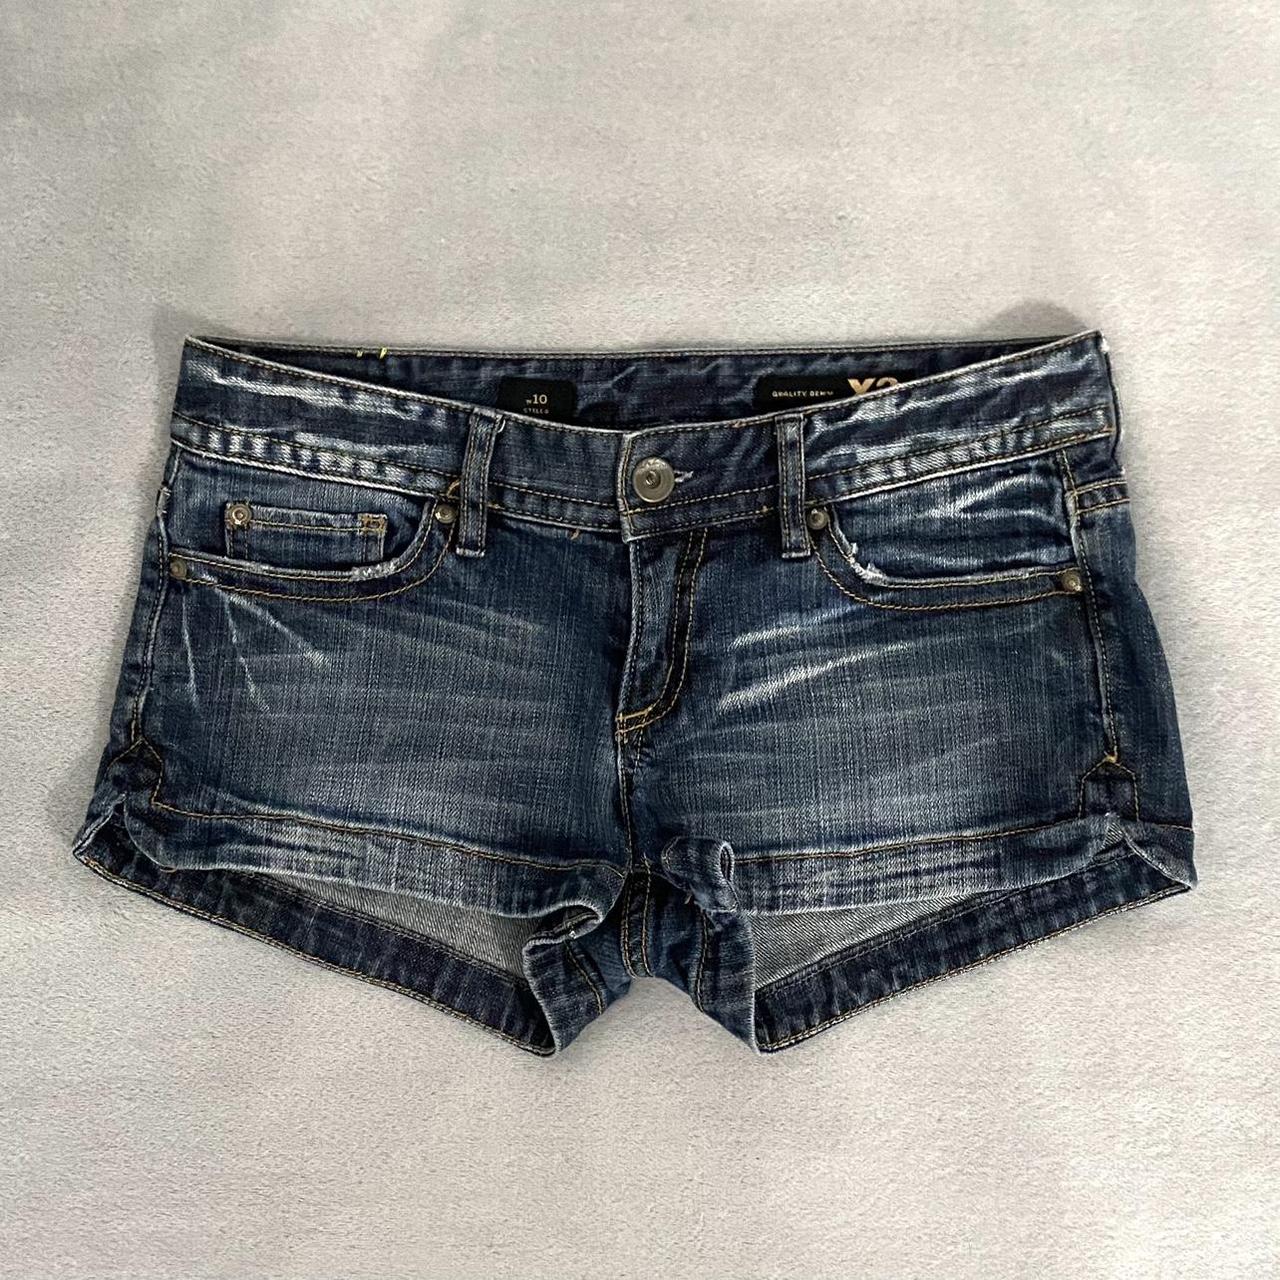 Quality denim X2 shorts size 4. #jeanshorts #y2k... - Depop